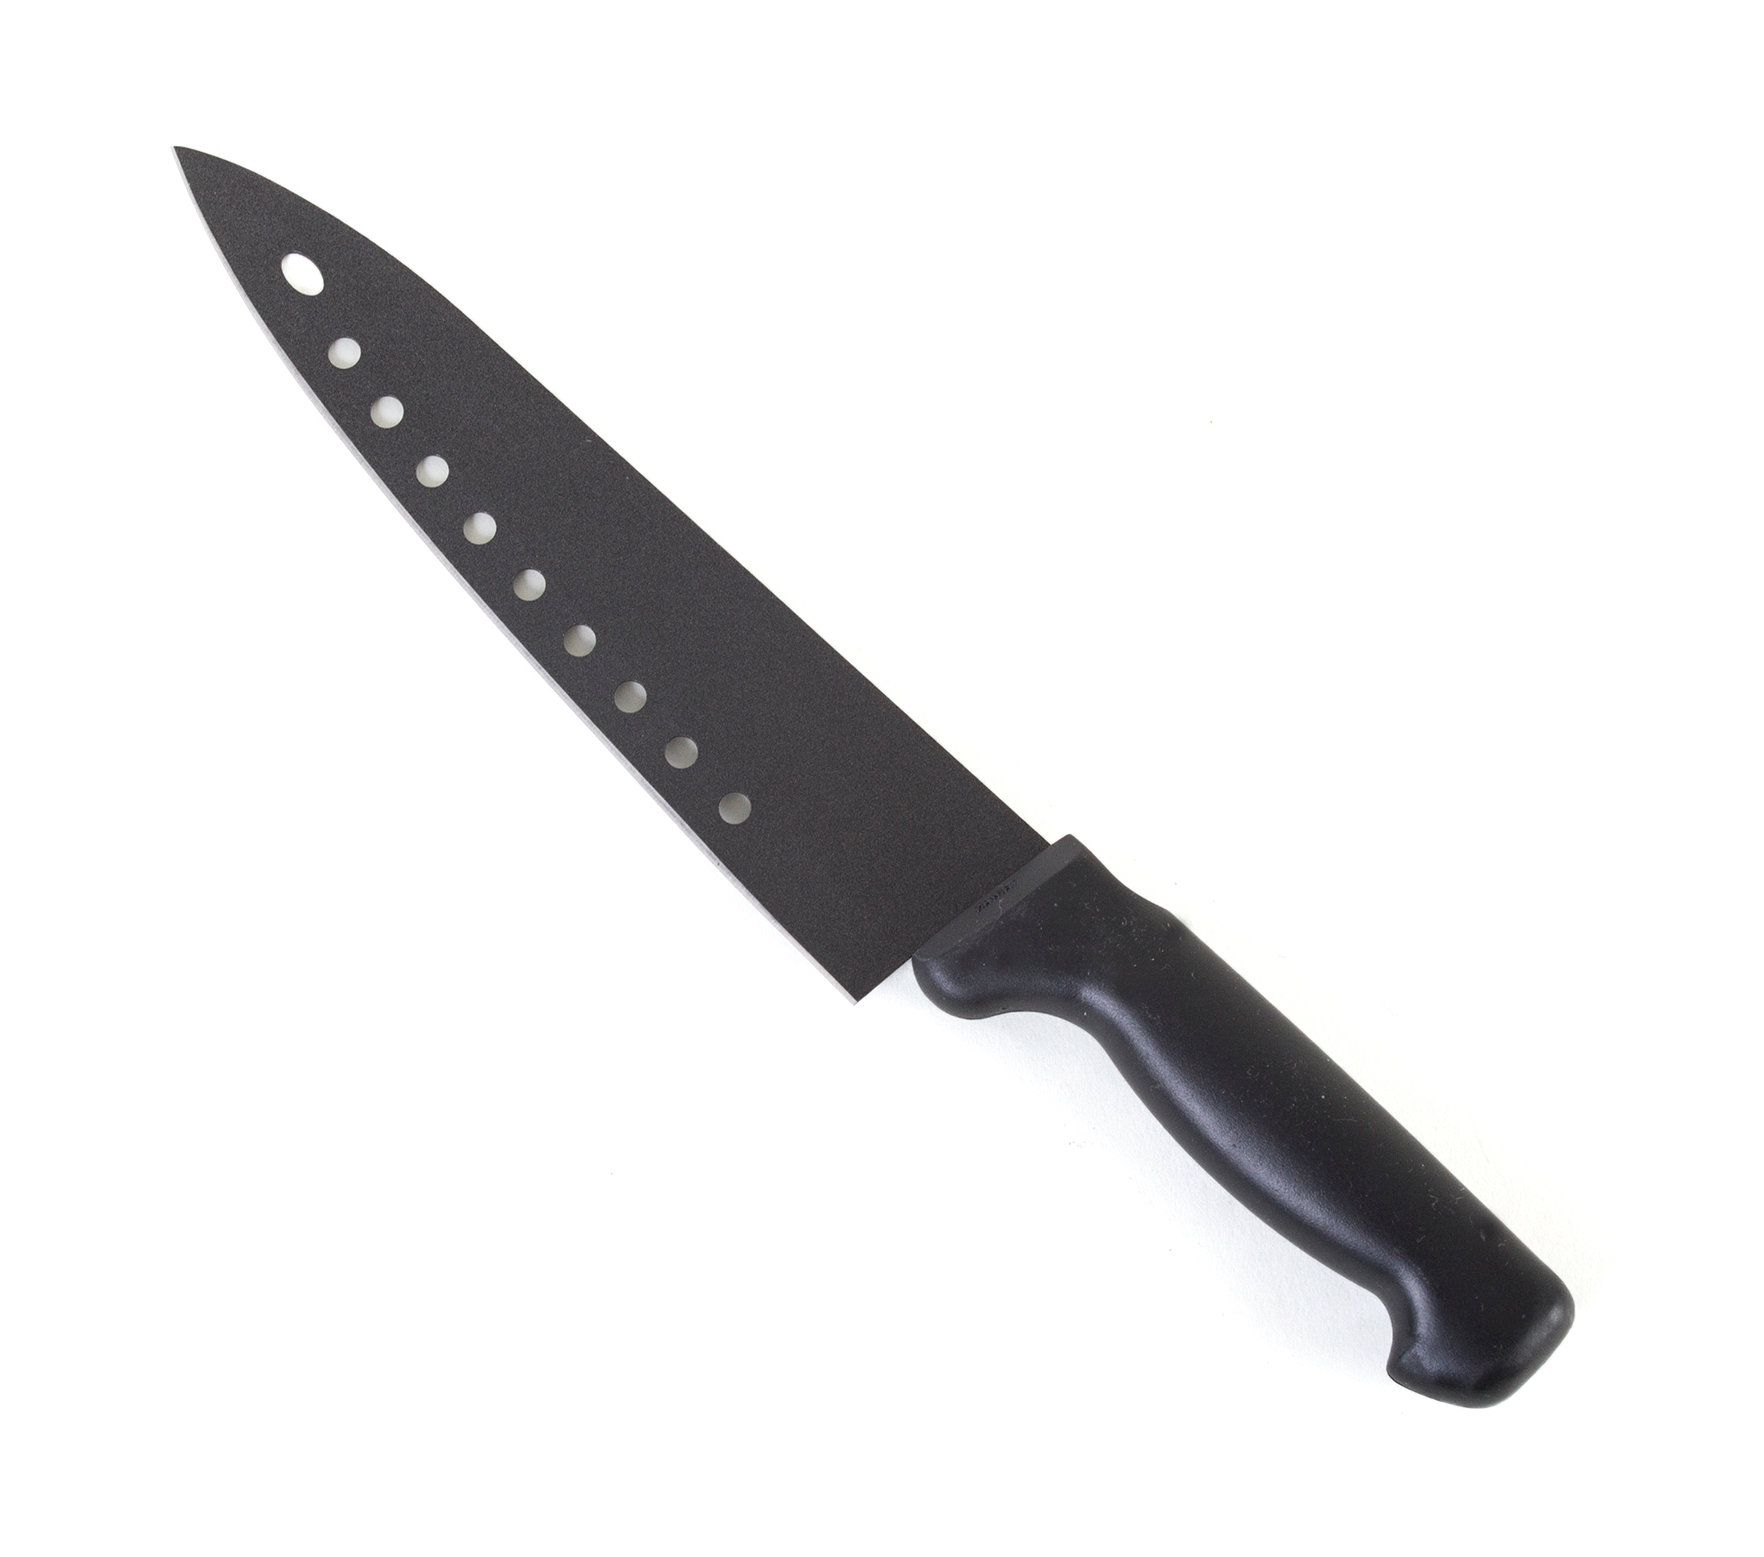 1 Pc 8 Chef Knife W/ Sheath Black Non Stick Blade Extra Sharp Home Kitchen